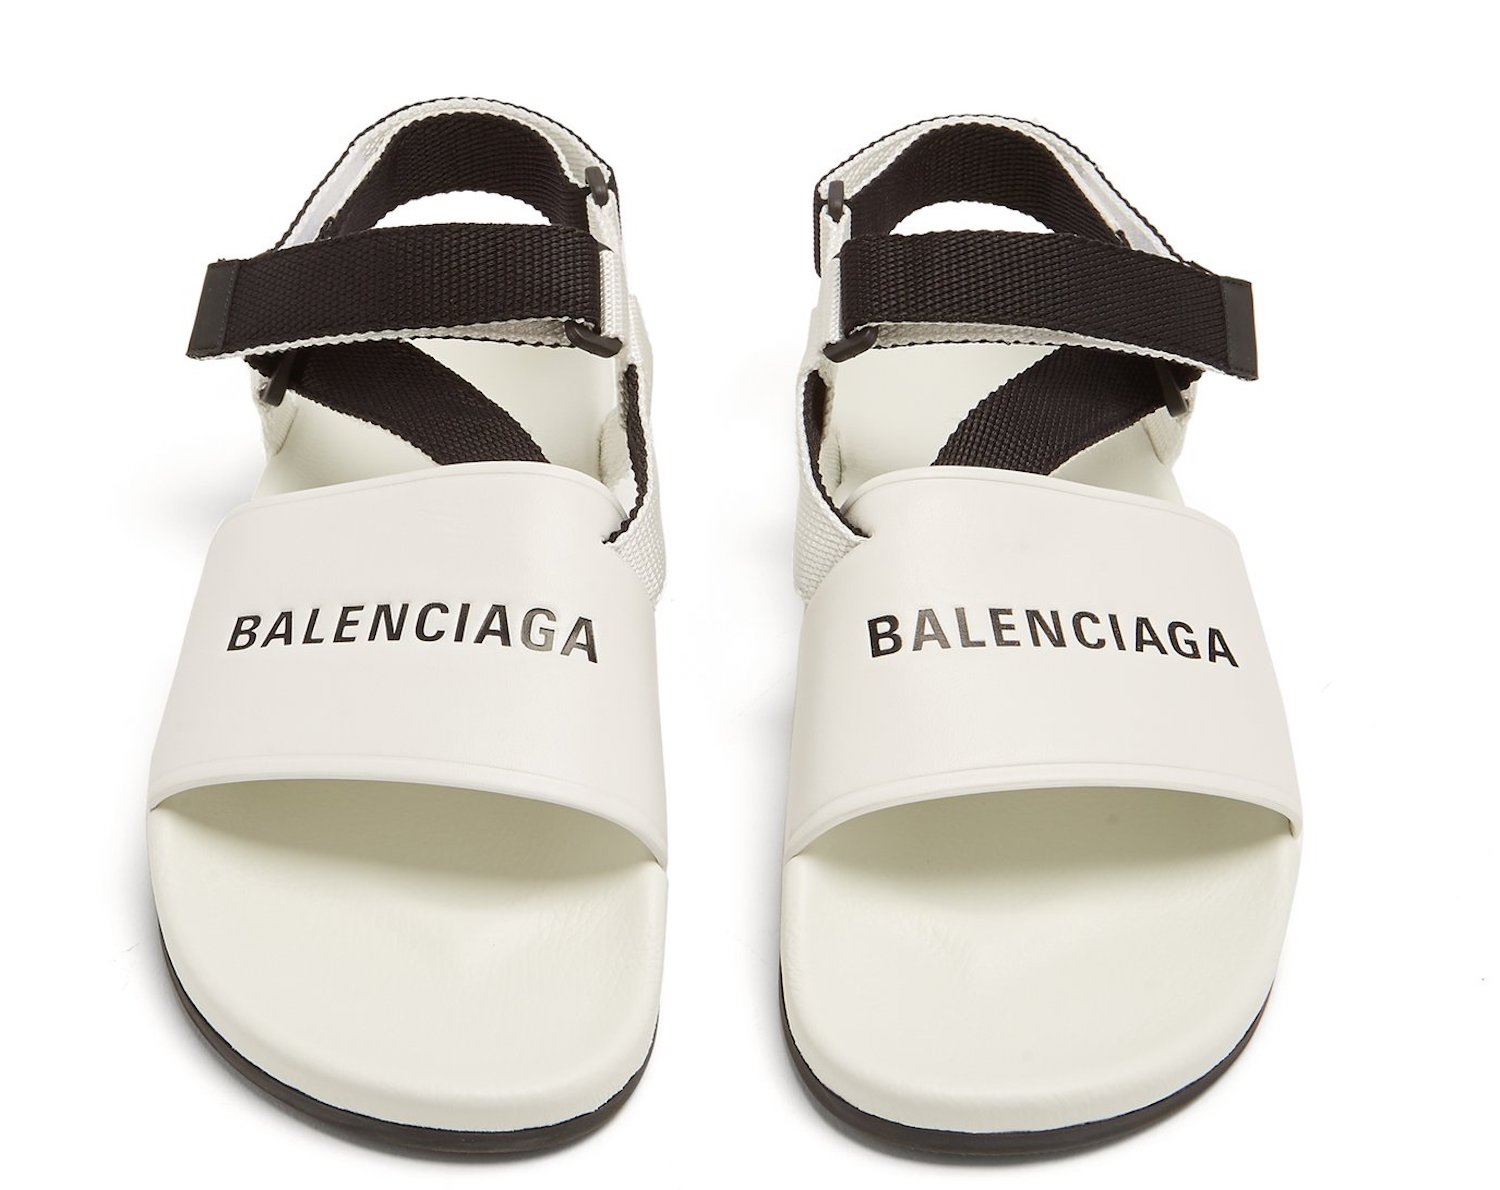 Balenciaga’s Triple S Sit Unsold Online